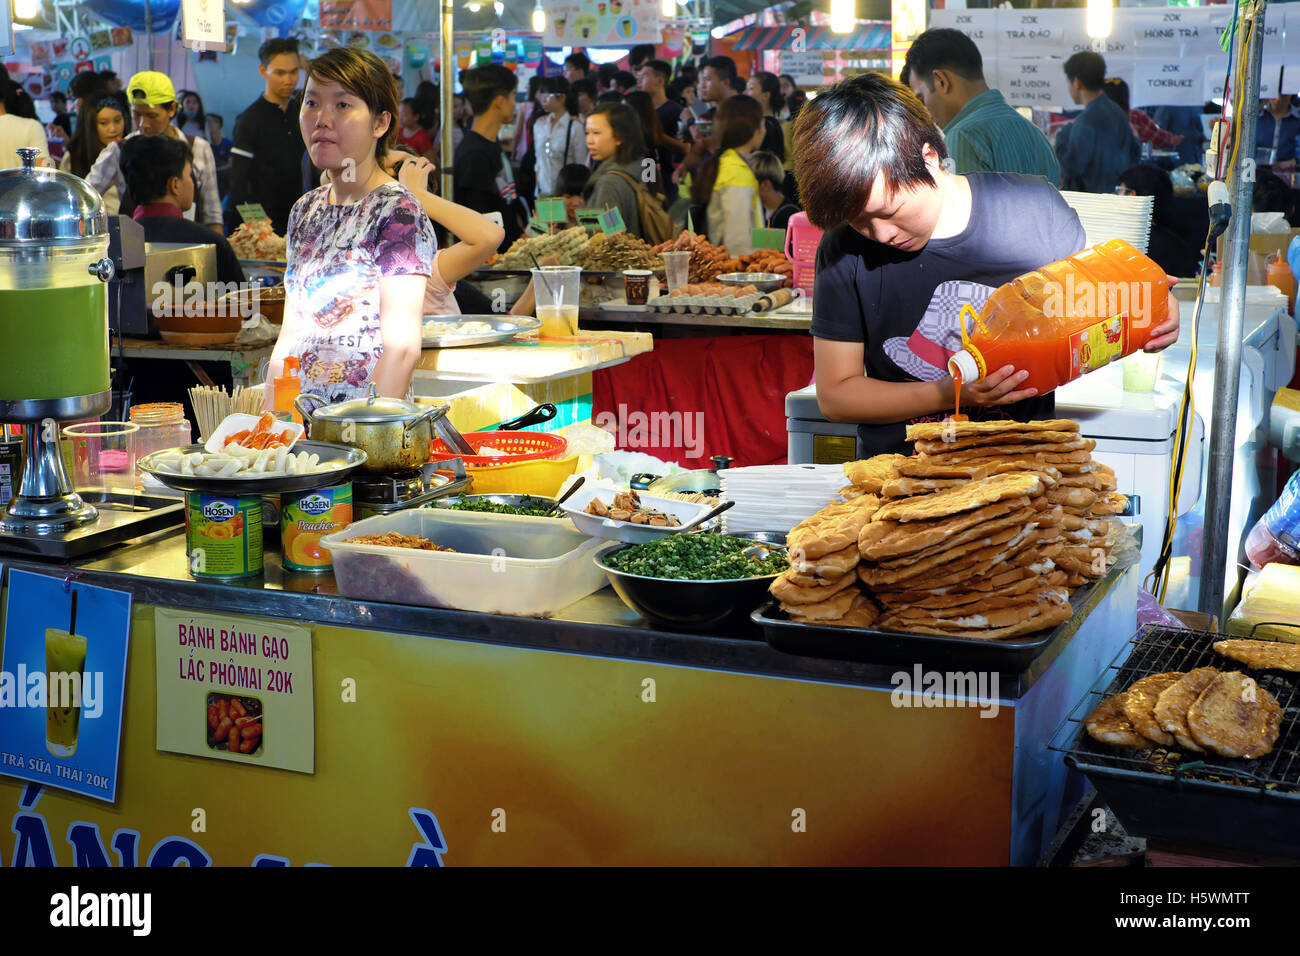 Food vendor in a Flea market Stock Photo